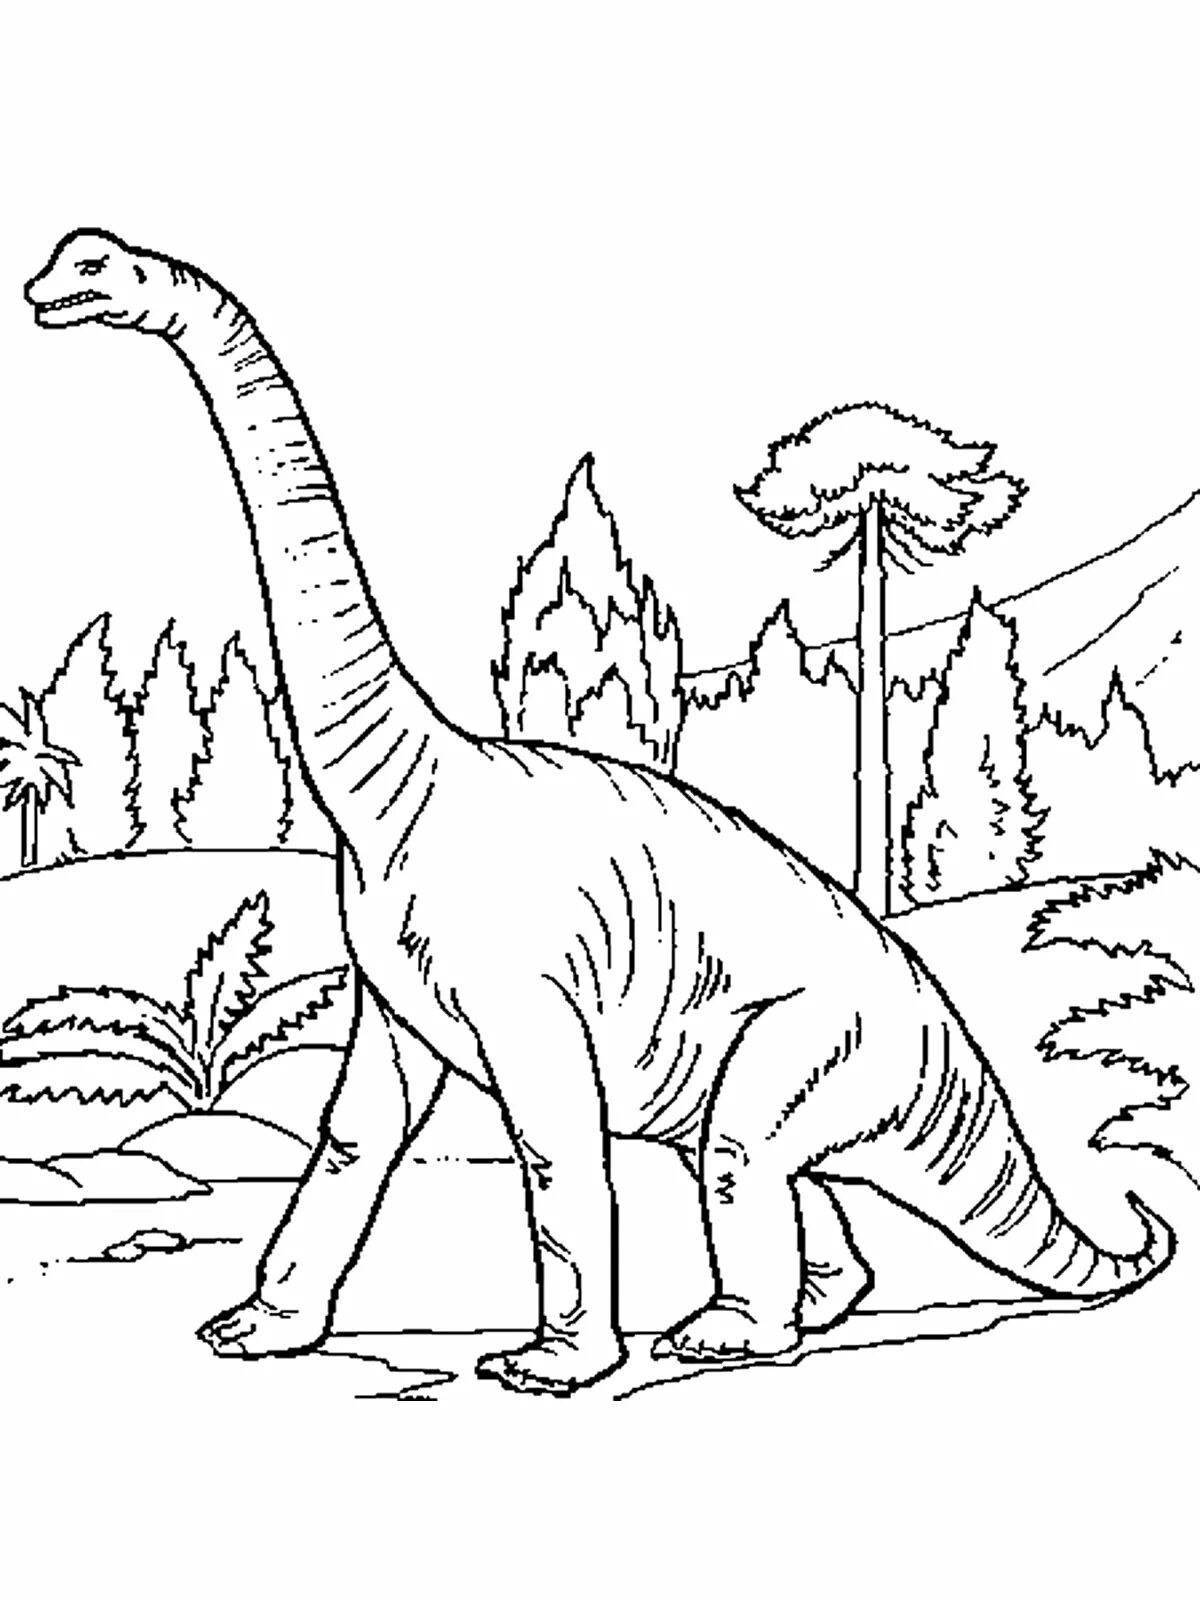 Coloring page charming brachiosaurus